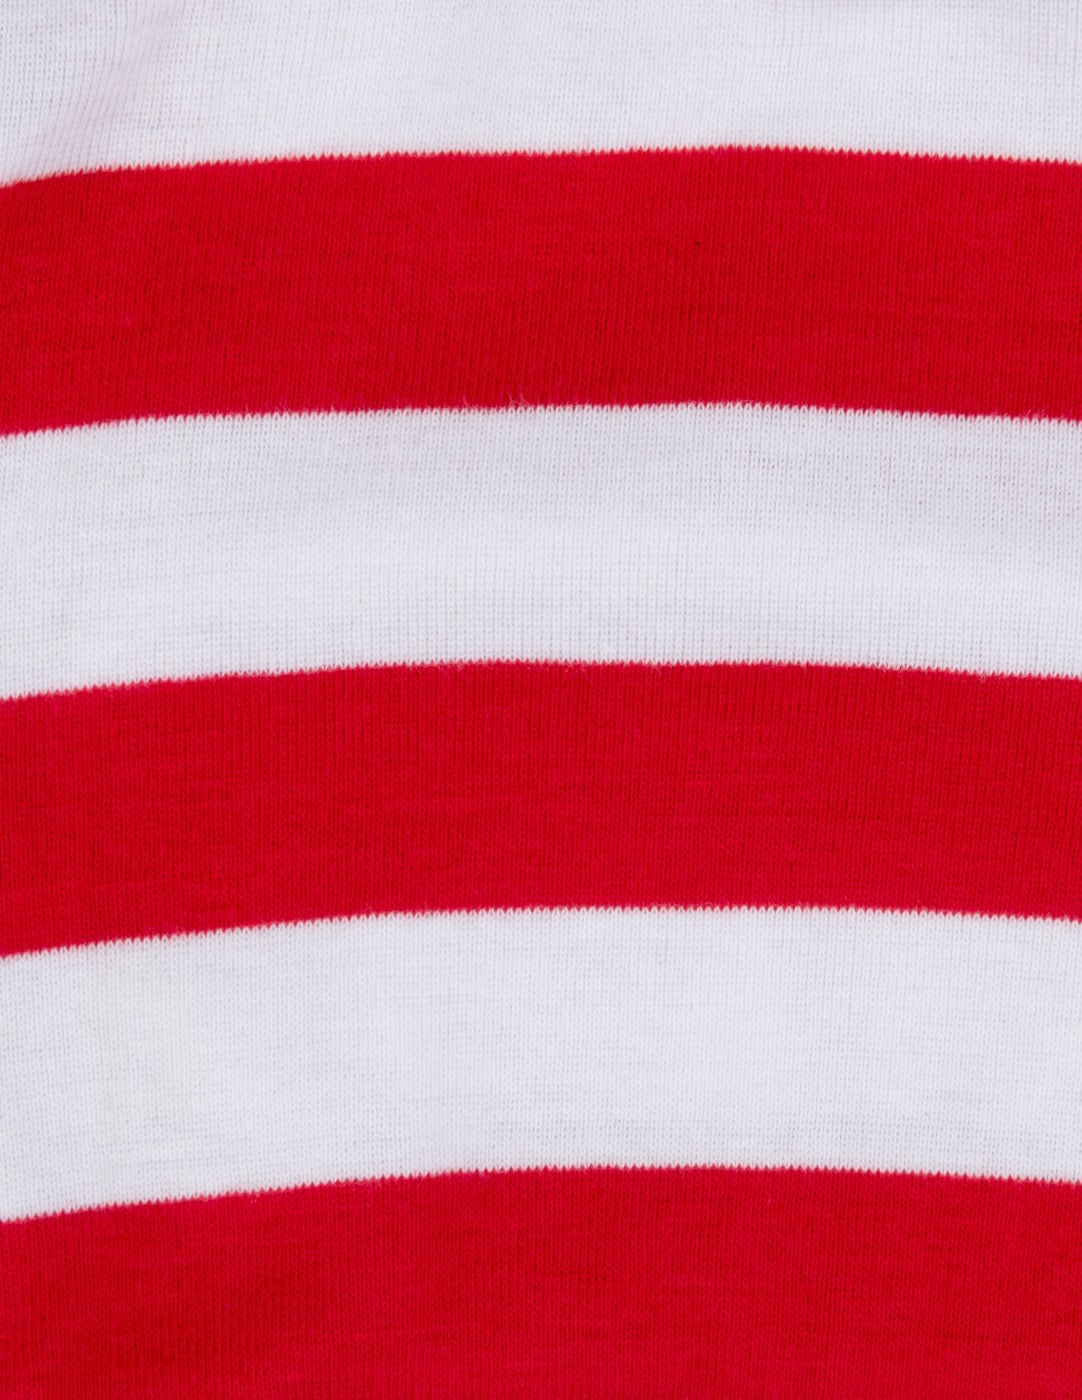 red and white striped dog pajamas